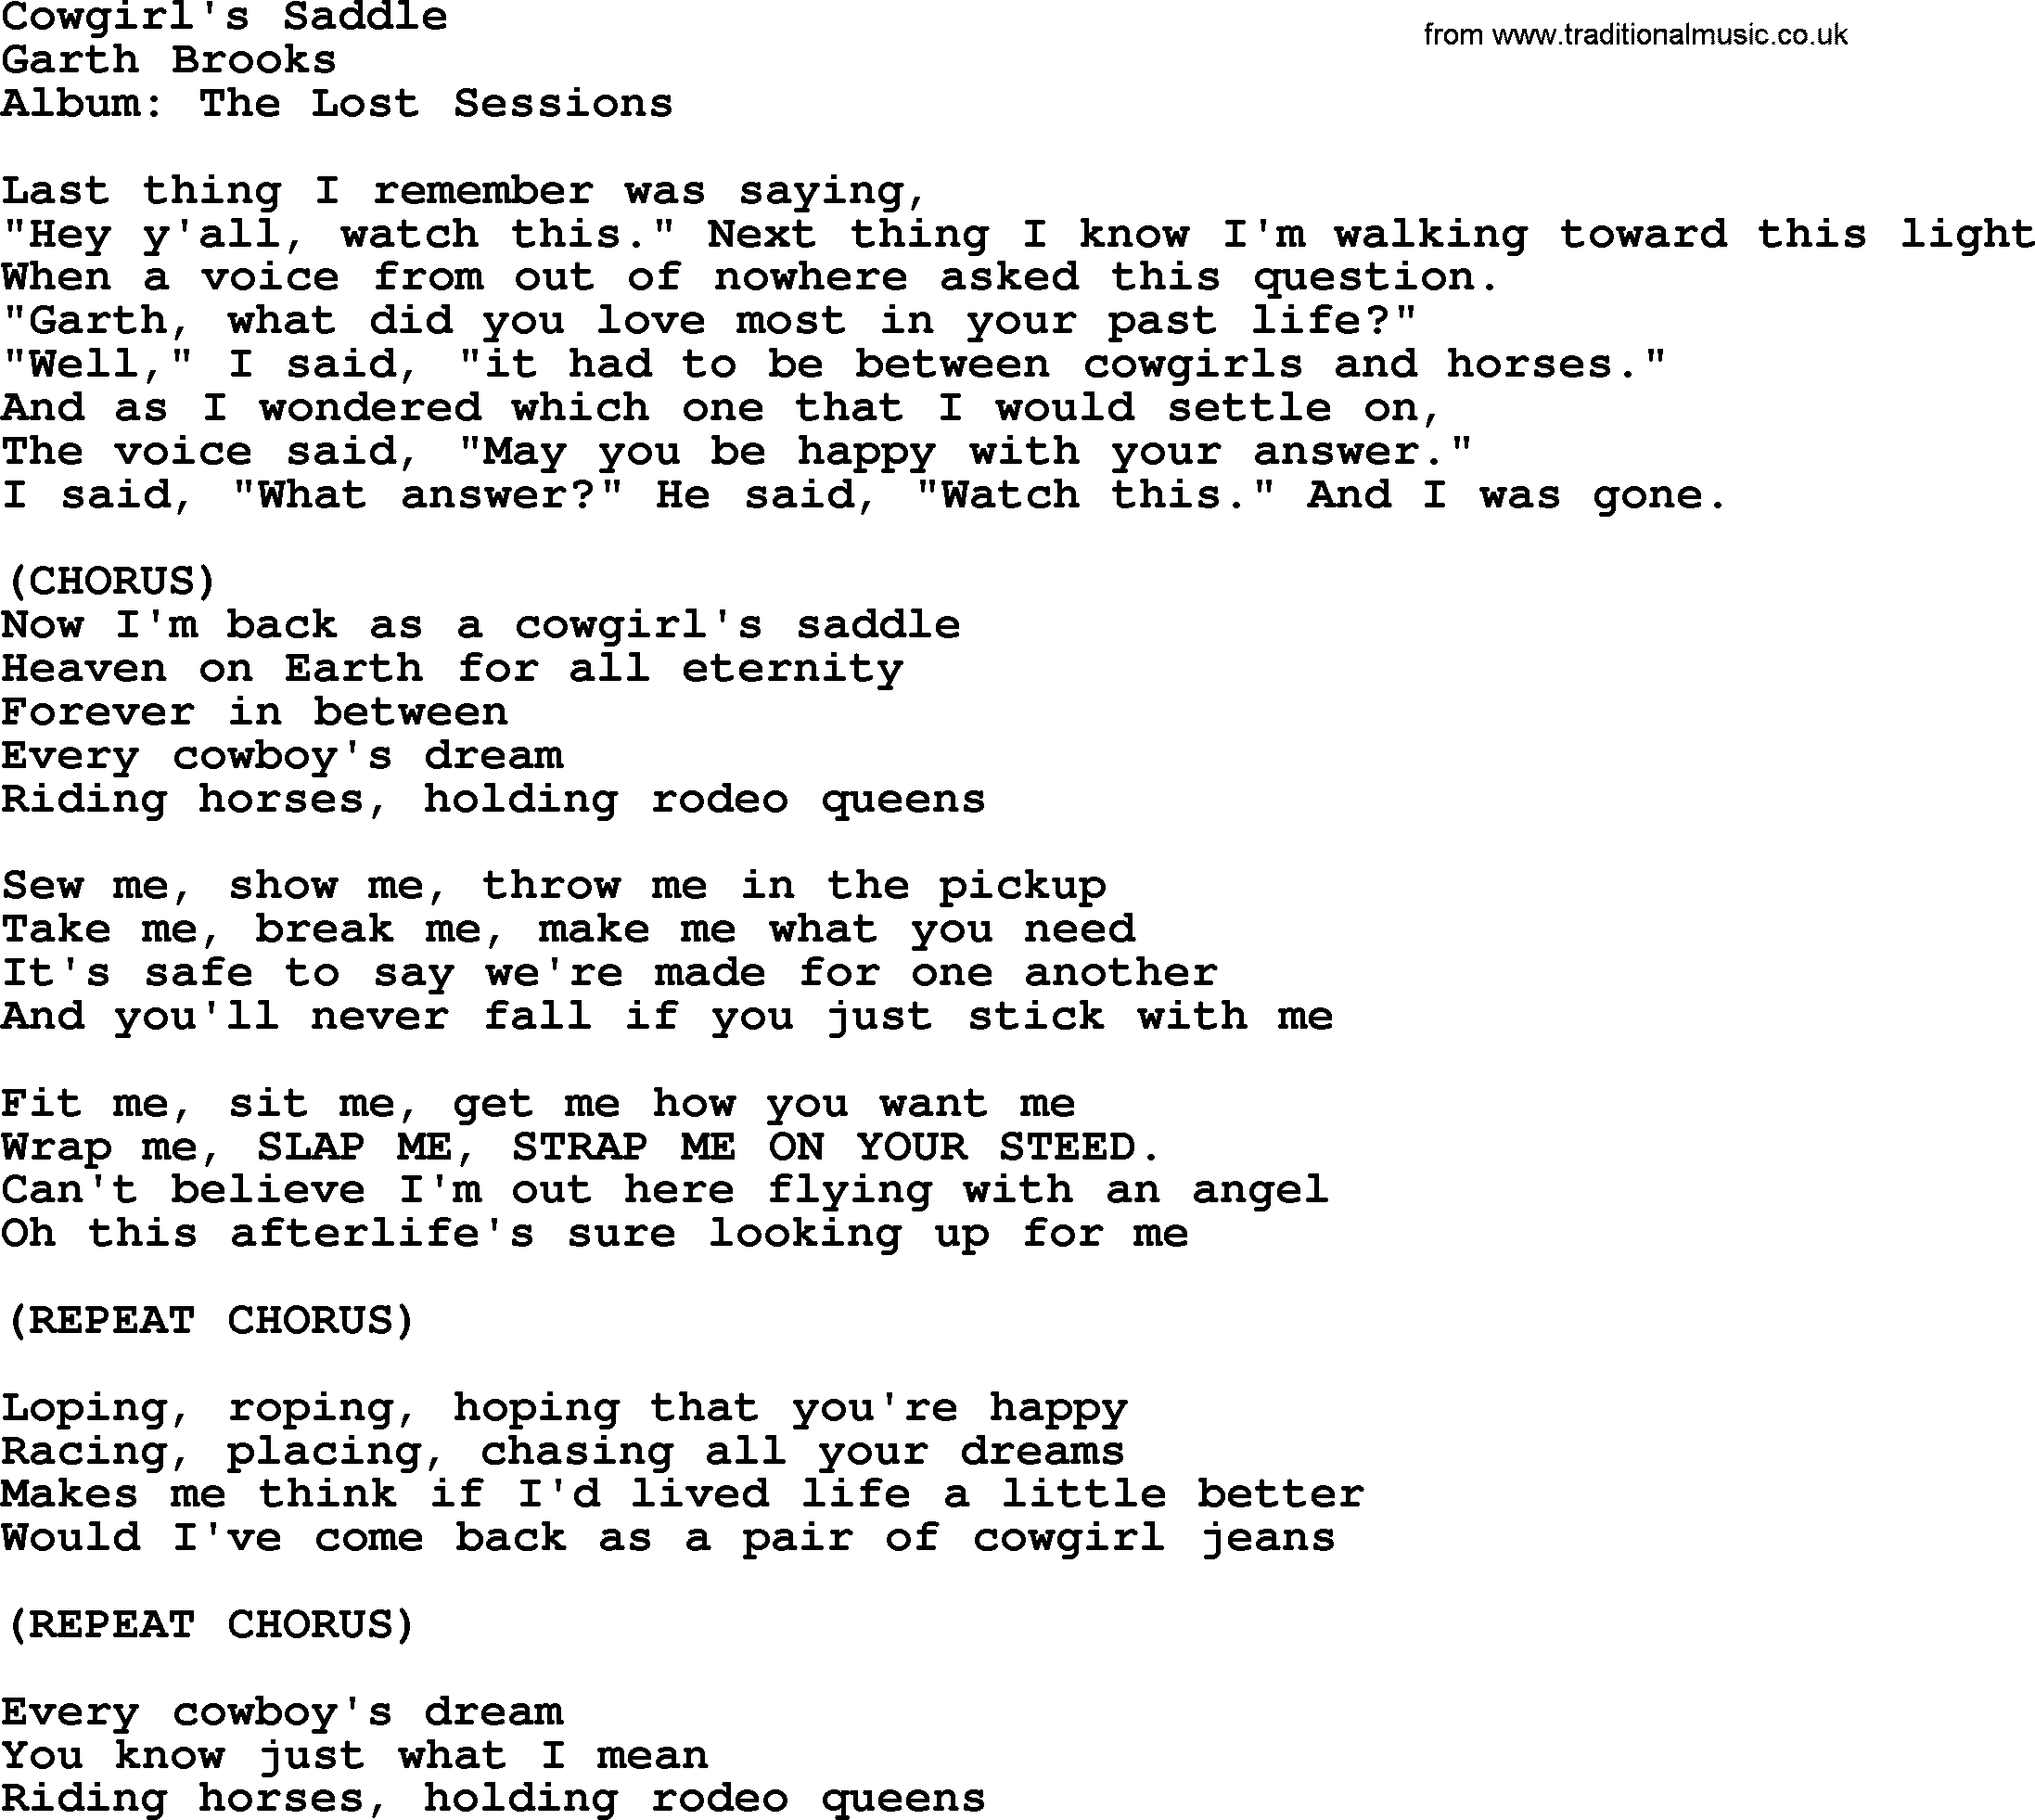 Garth Brooks song: Cowgirl's Saddle, lyrics